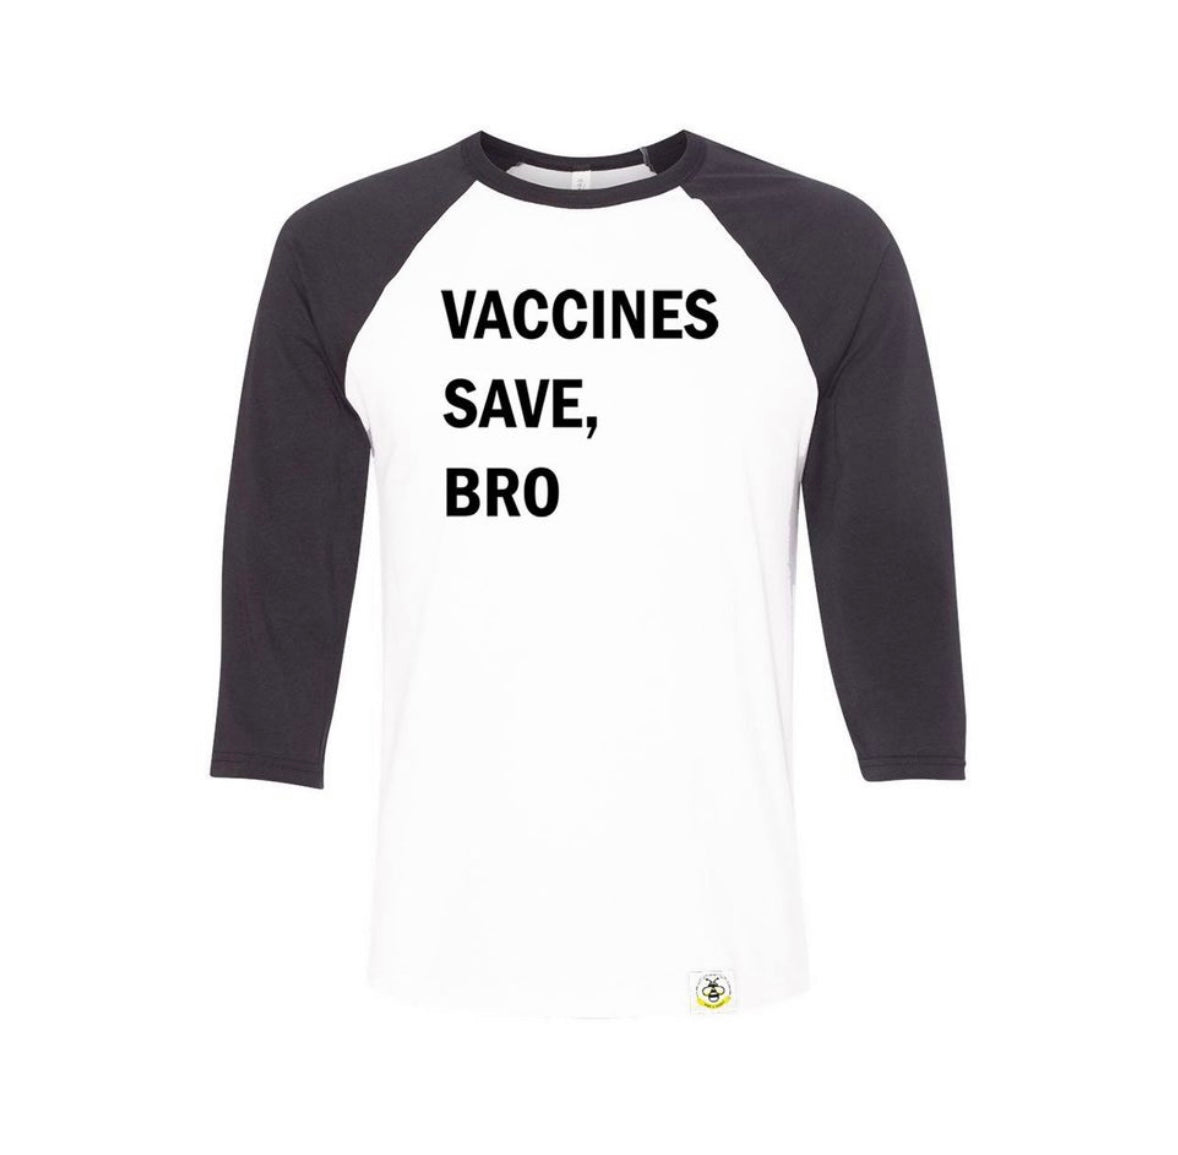 Vaccines Save, Bro (Adult)